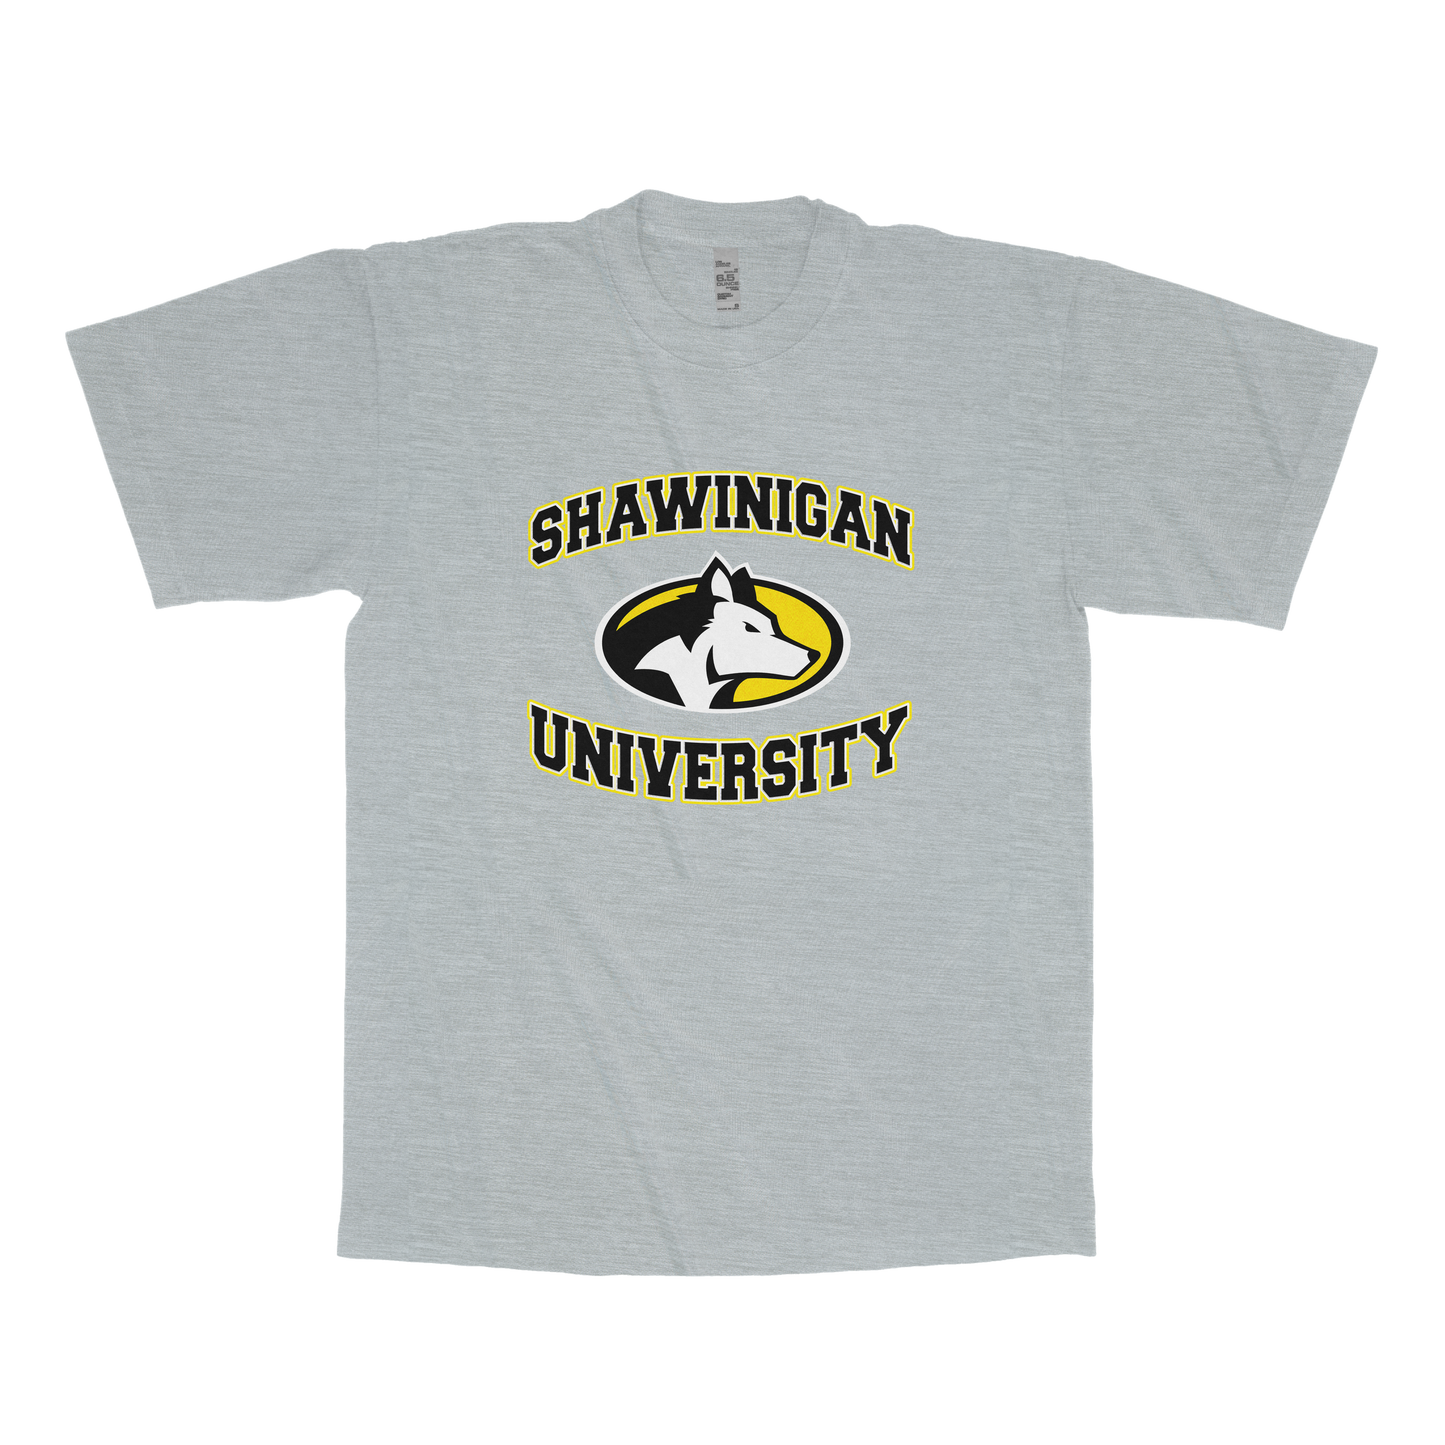 Shawinigan University (FAKE U)